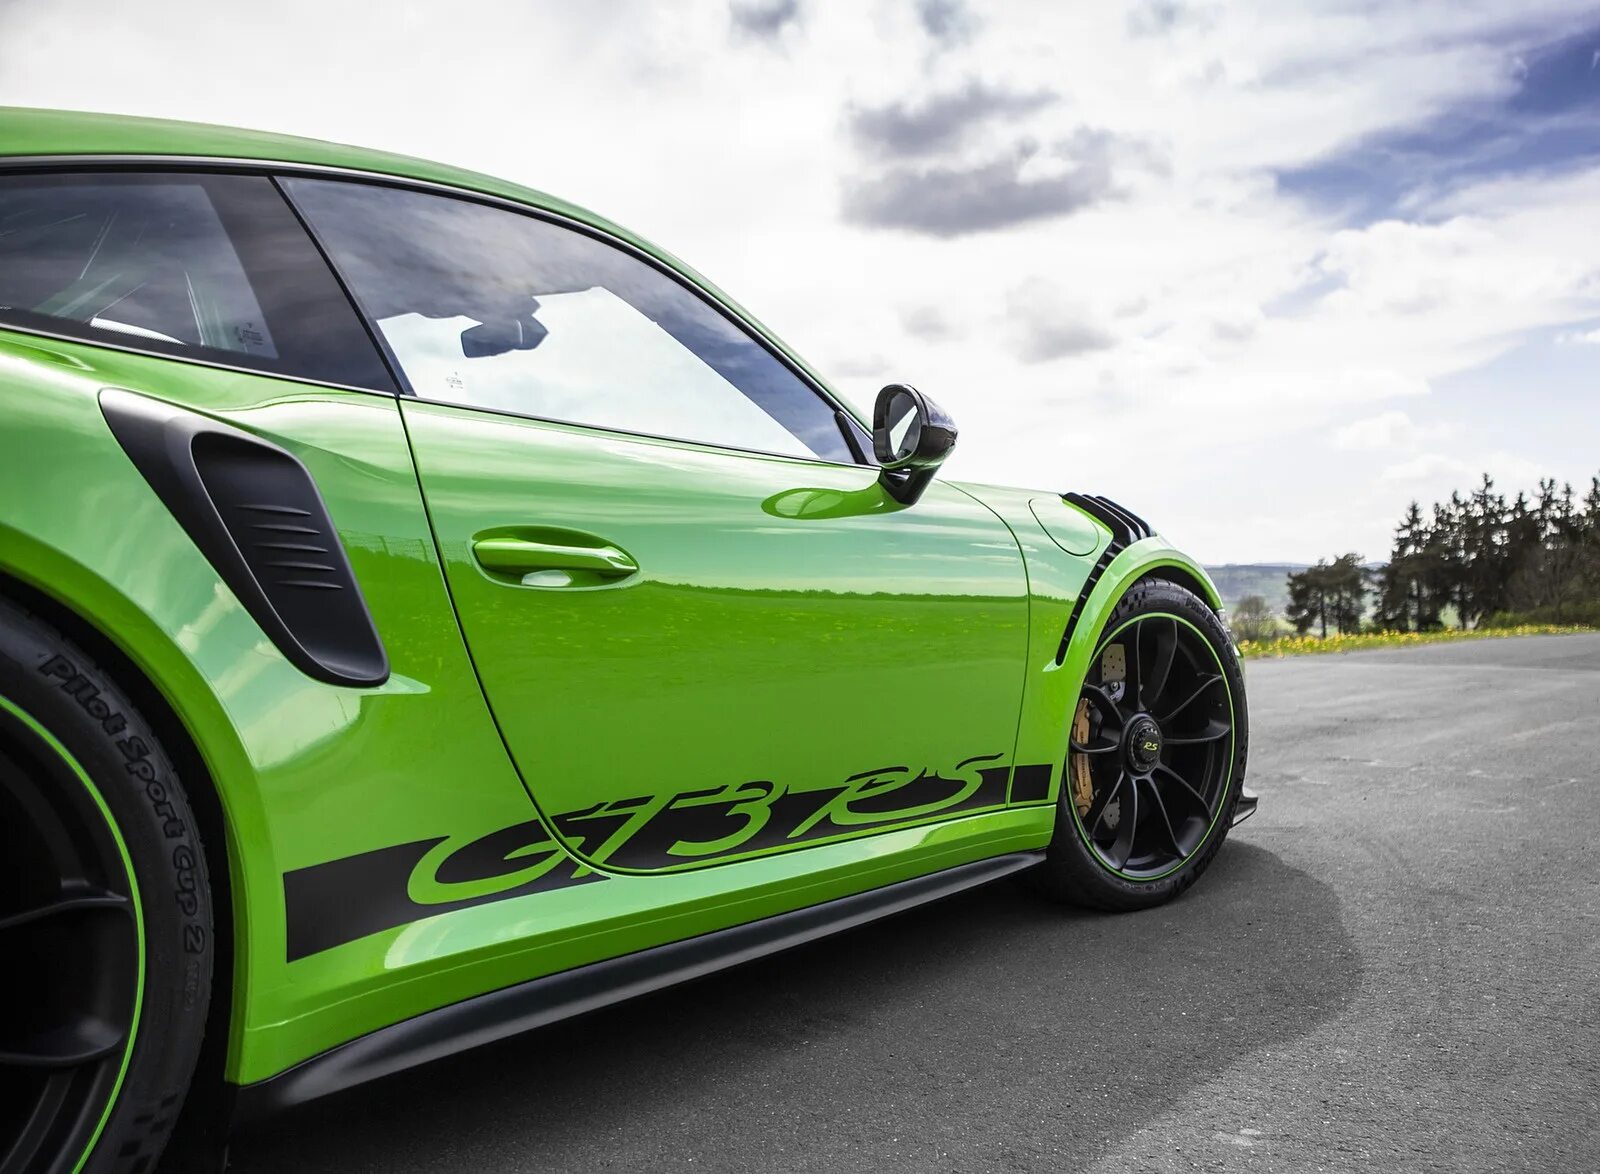 Porsche 911 gt3 RS зеленый. Porsche gt3 RS. Порше гт3 2019 салатовый. Зеленый Порше ГТ 2 РС. Green detail